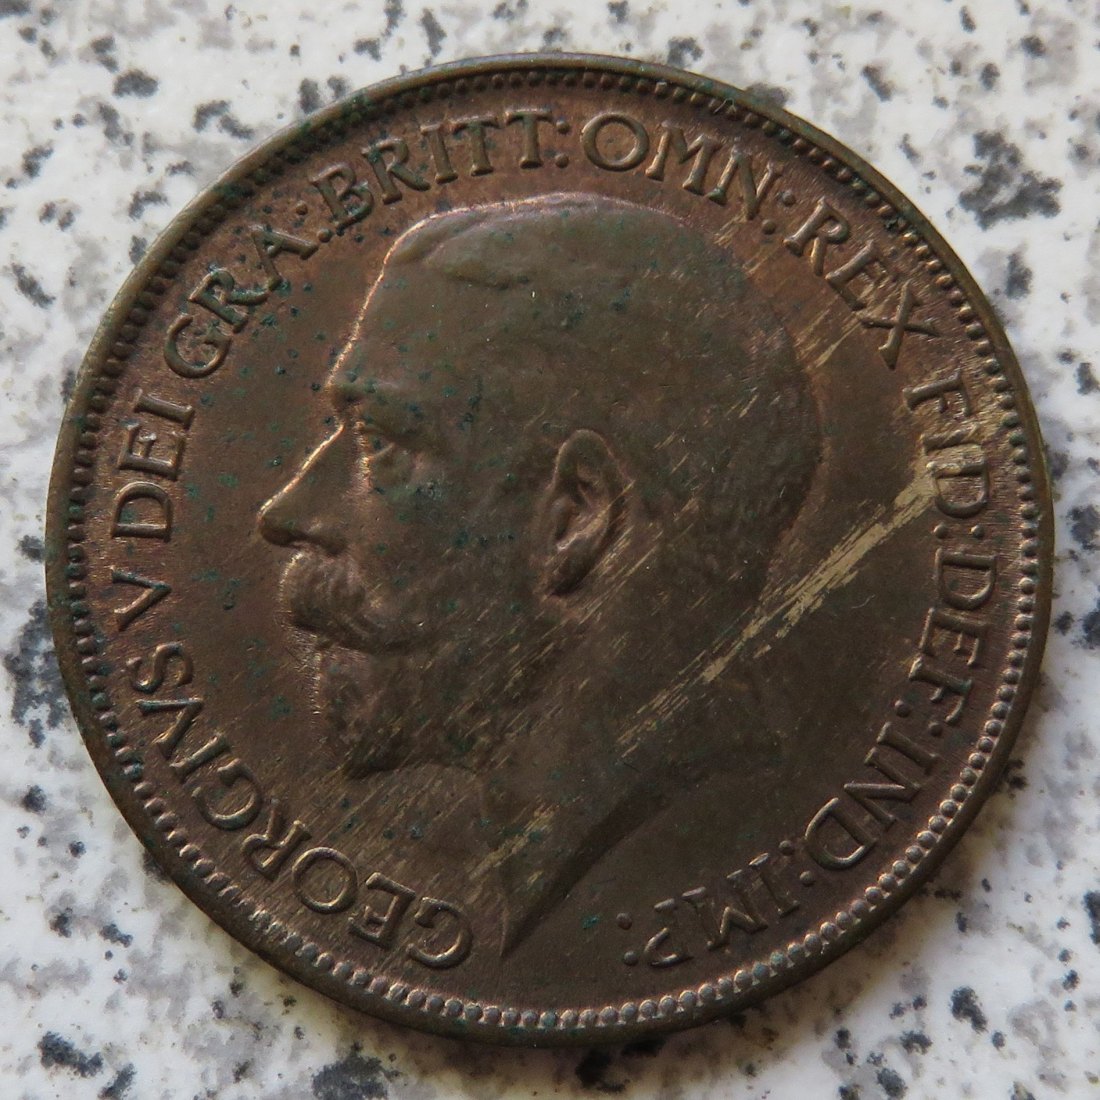  Großbritannien half Penny 1921   